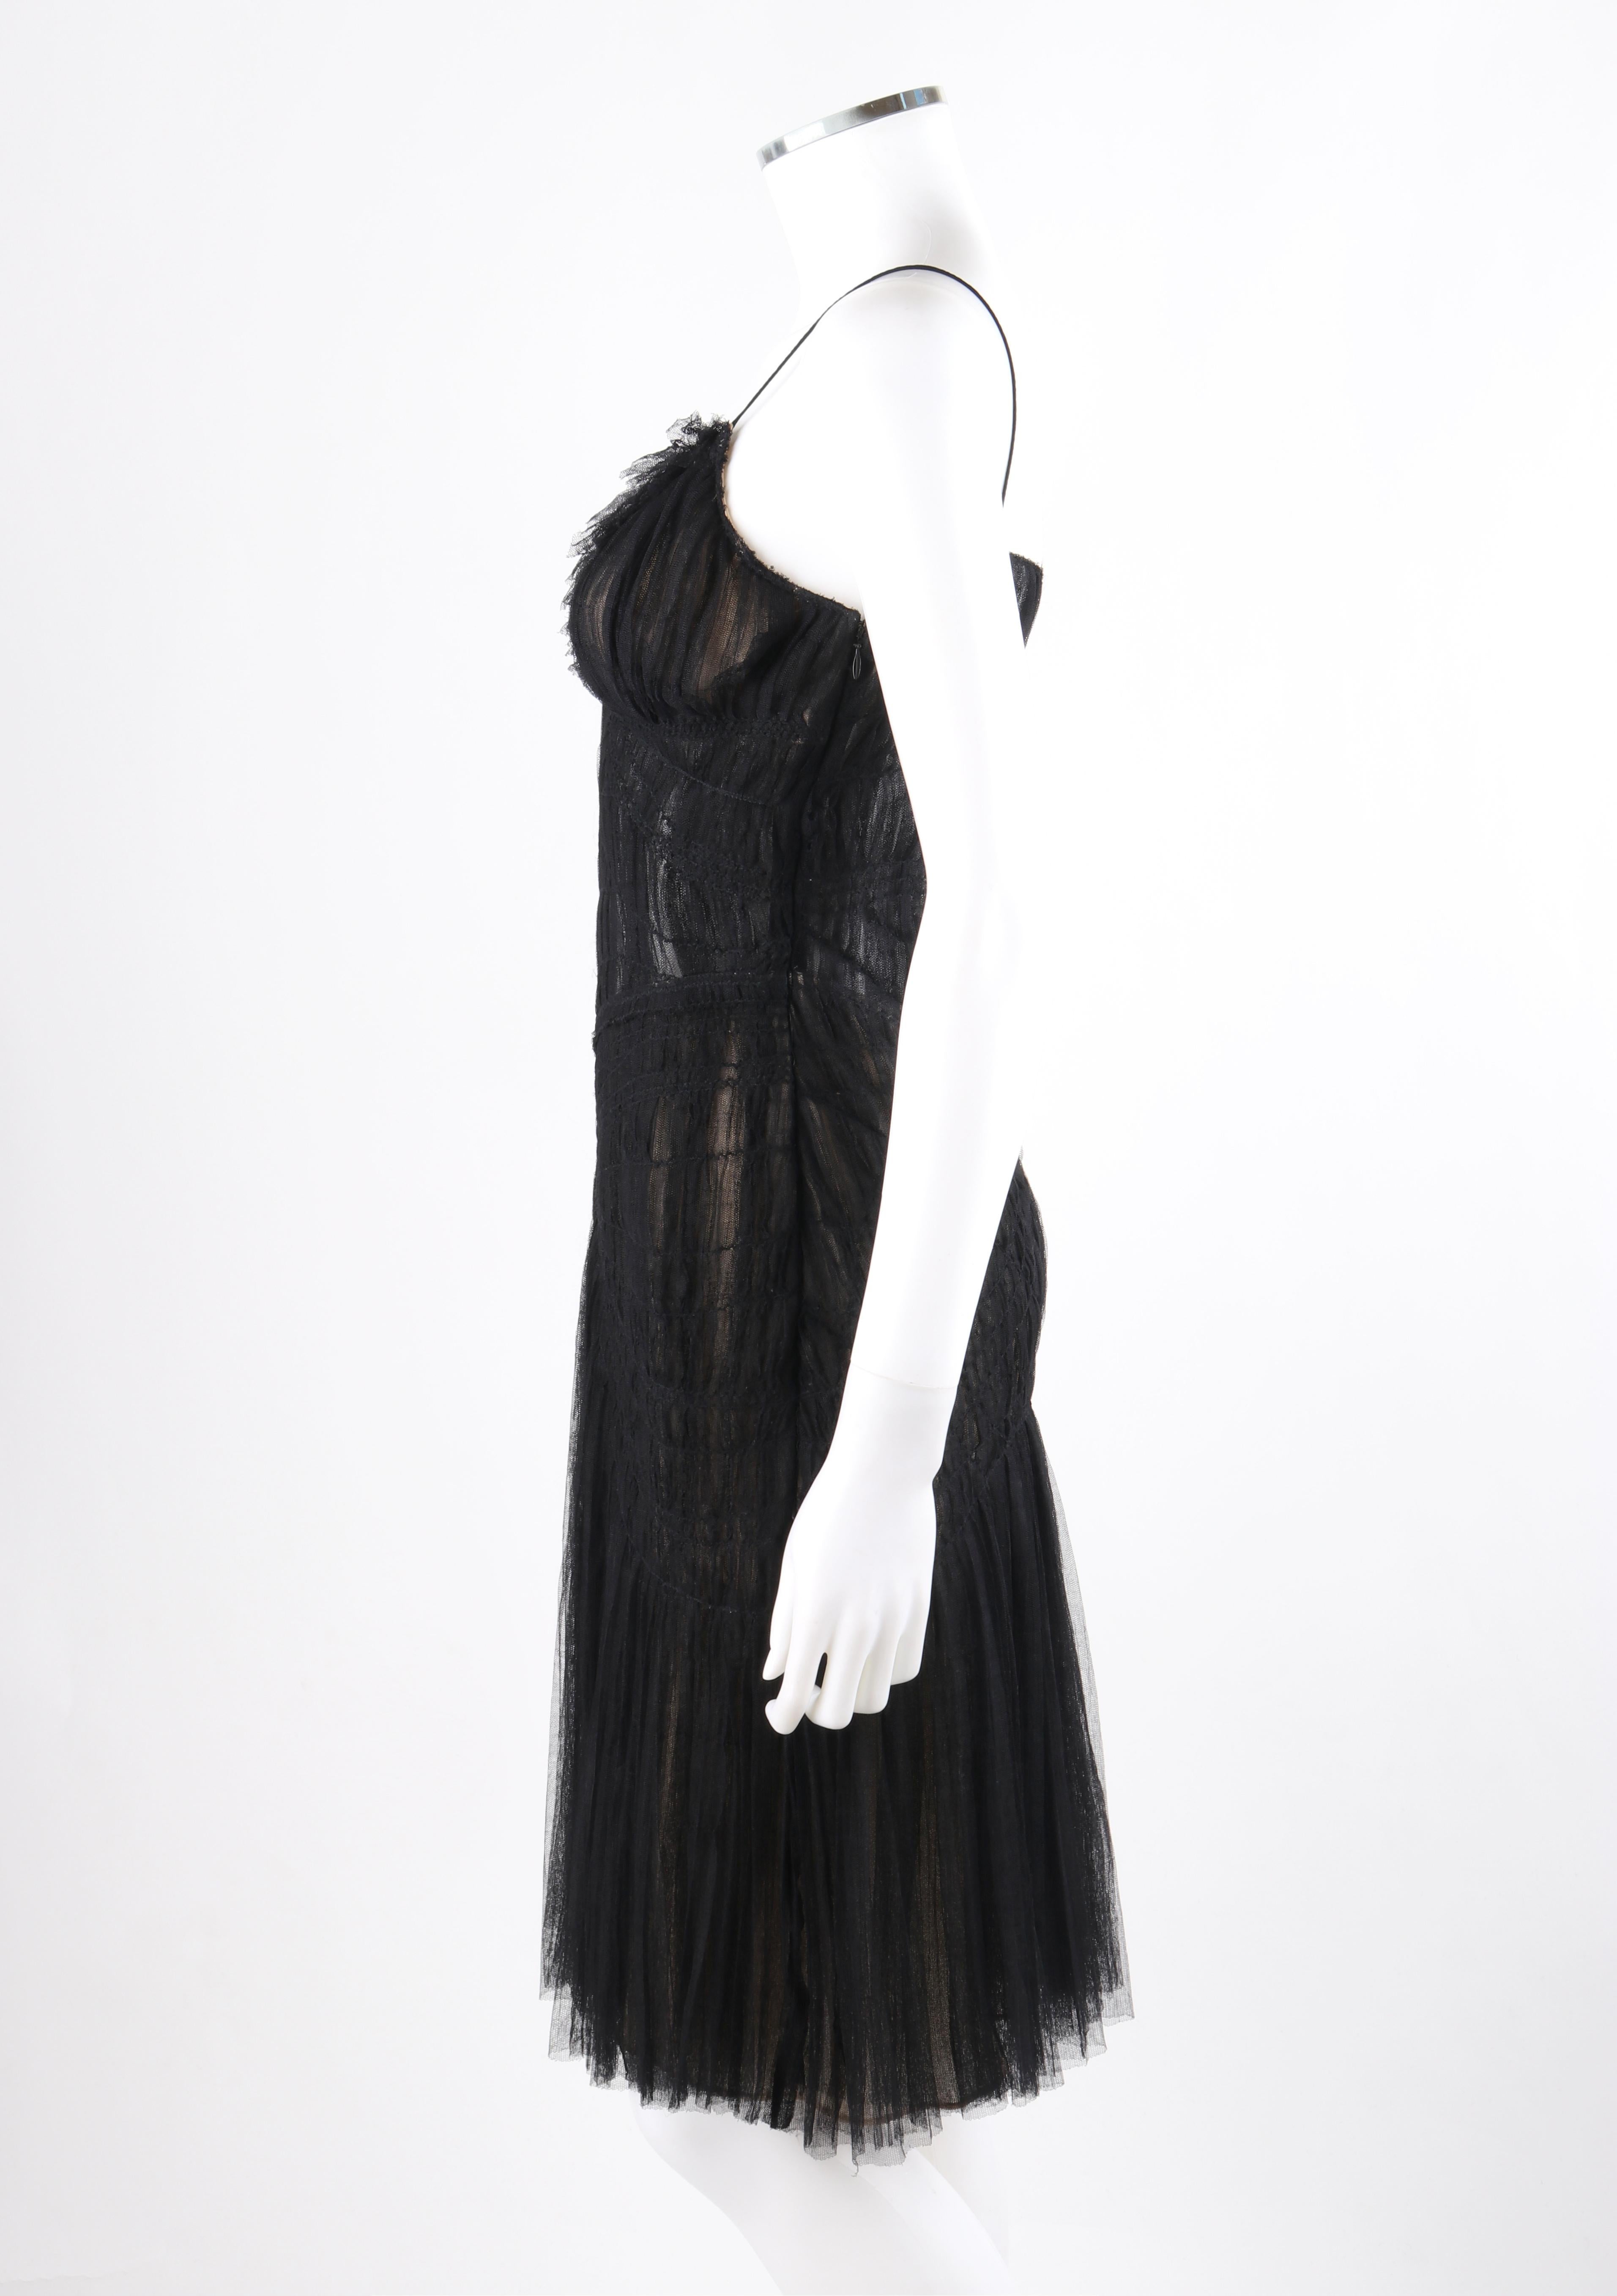 Women's ALEXANDER McQUEEN S/S 2003 “Irere” Black Gathered Layer Tulle Mesh V Neck Dress For Sale